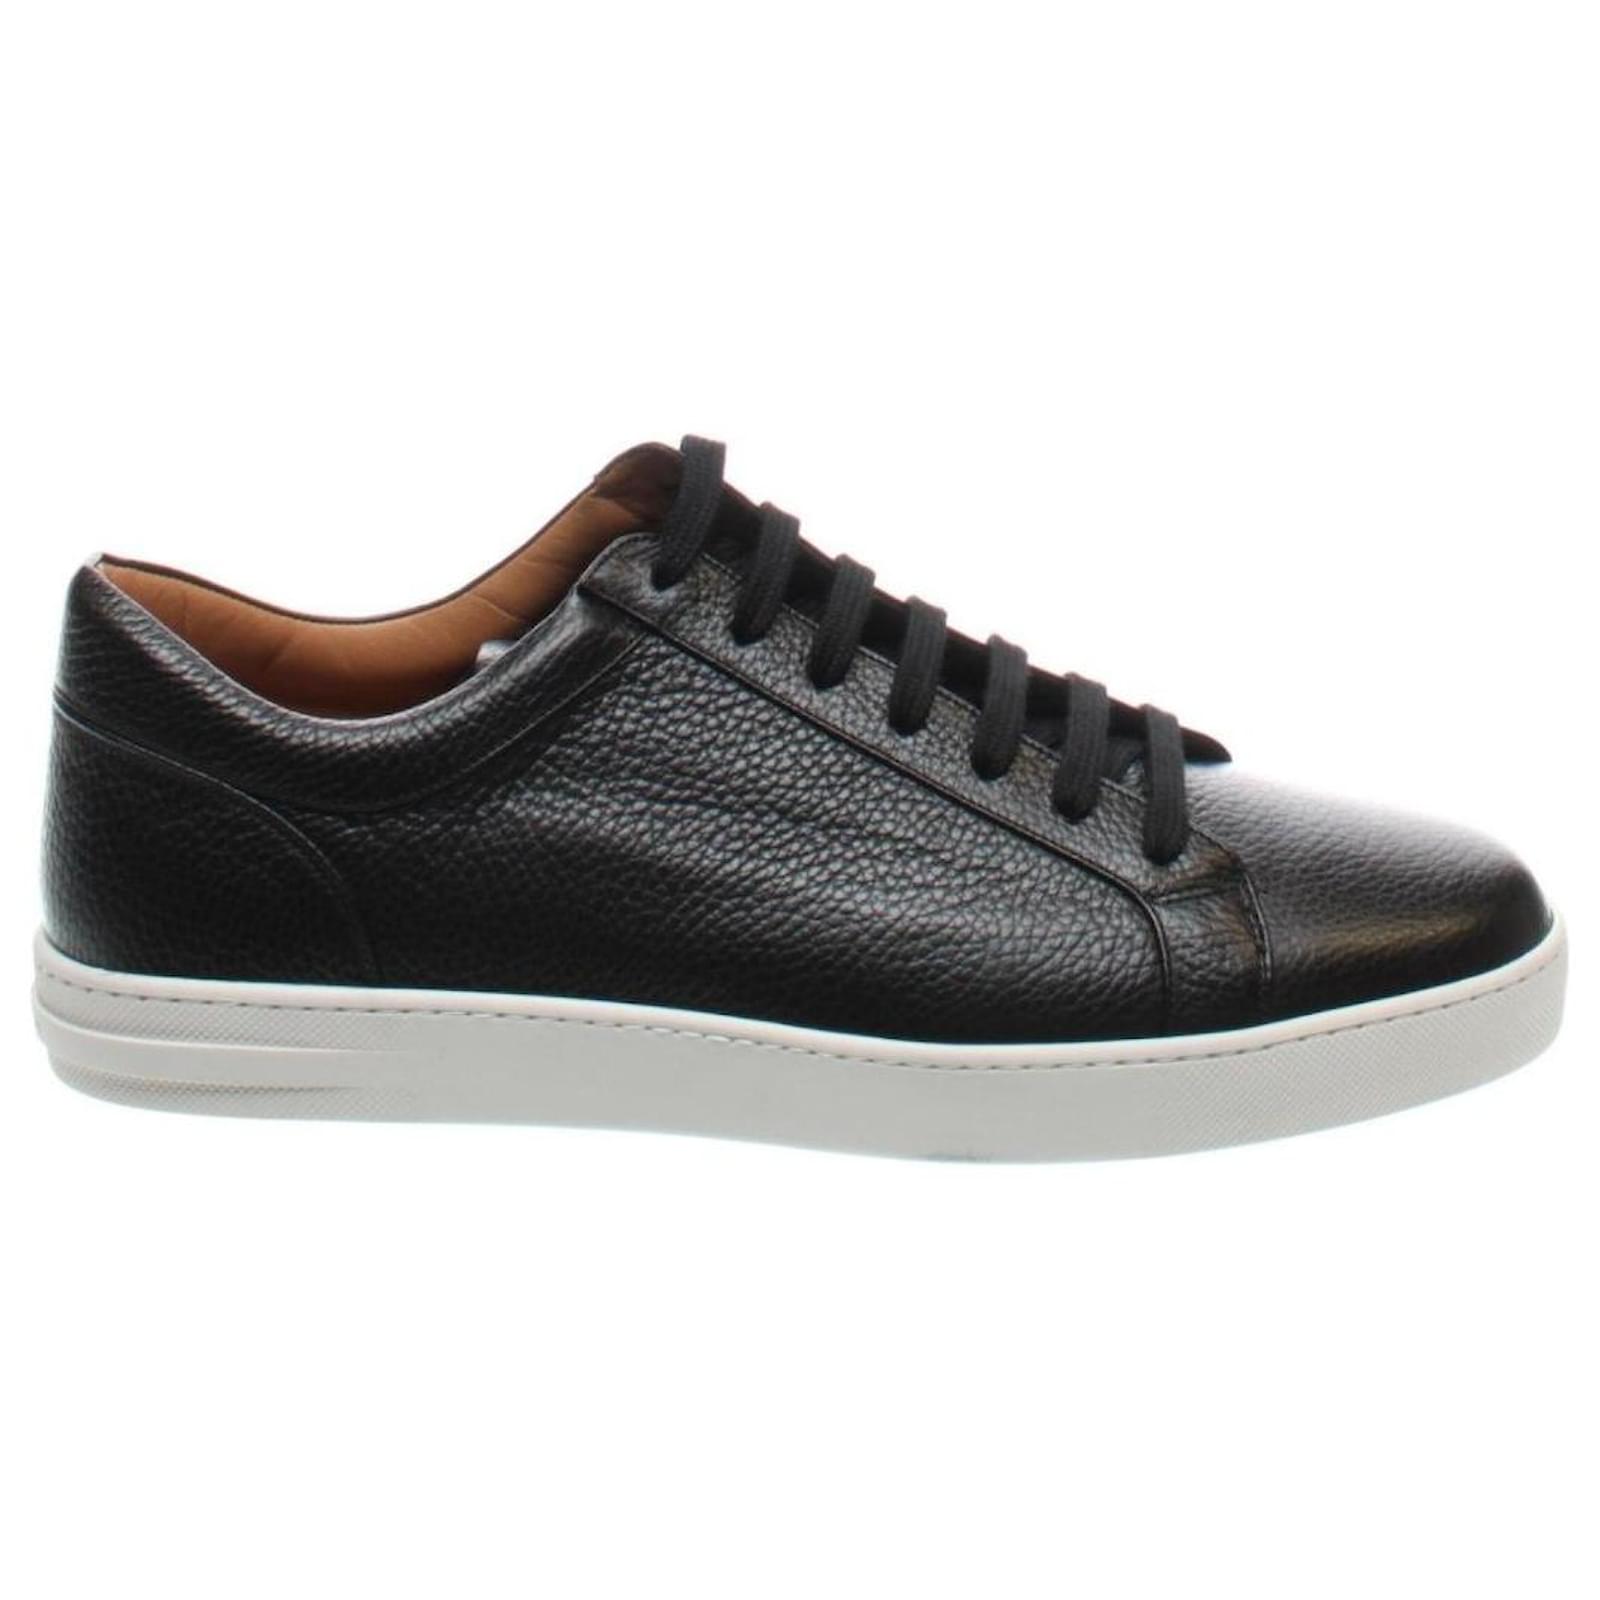 Mocassini Zara Black Leather Shoes in Sonepat at best price by Mohit  Enterprises - Justdial